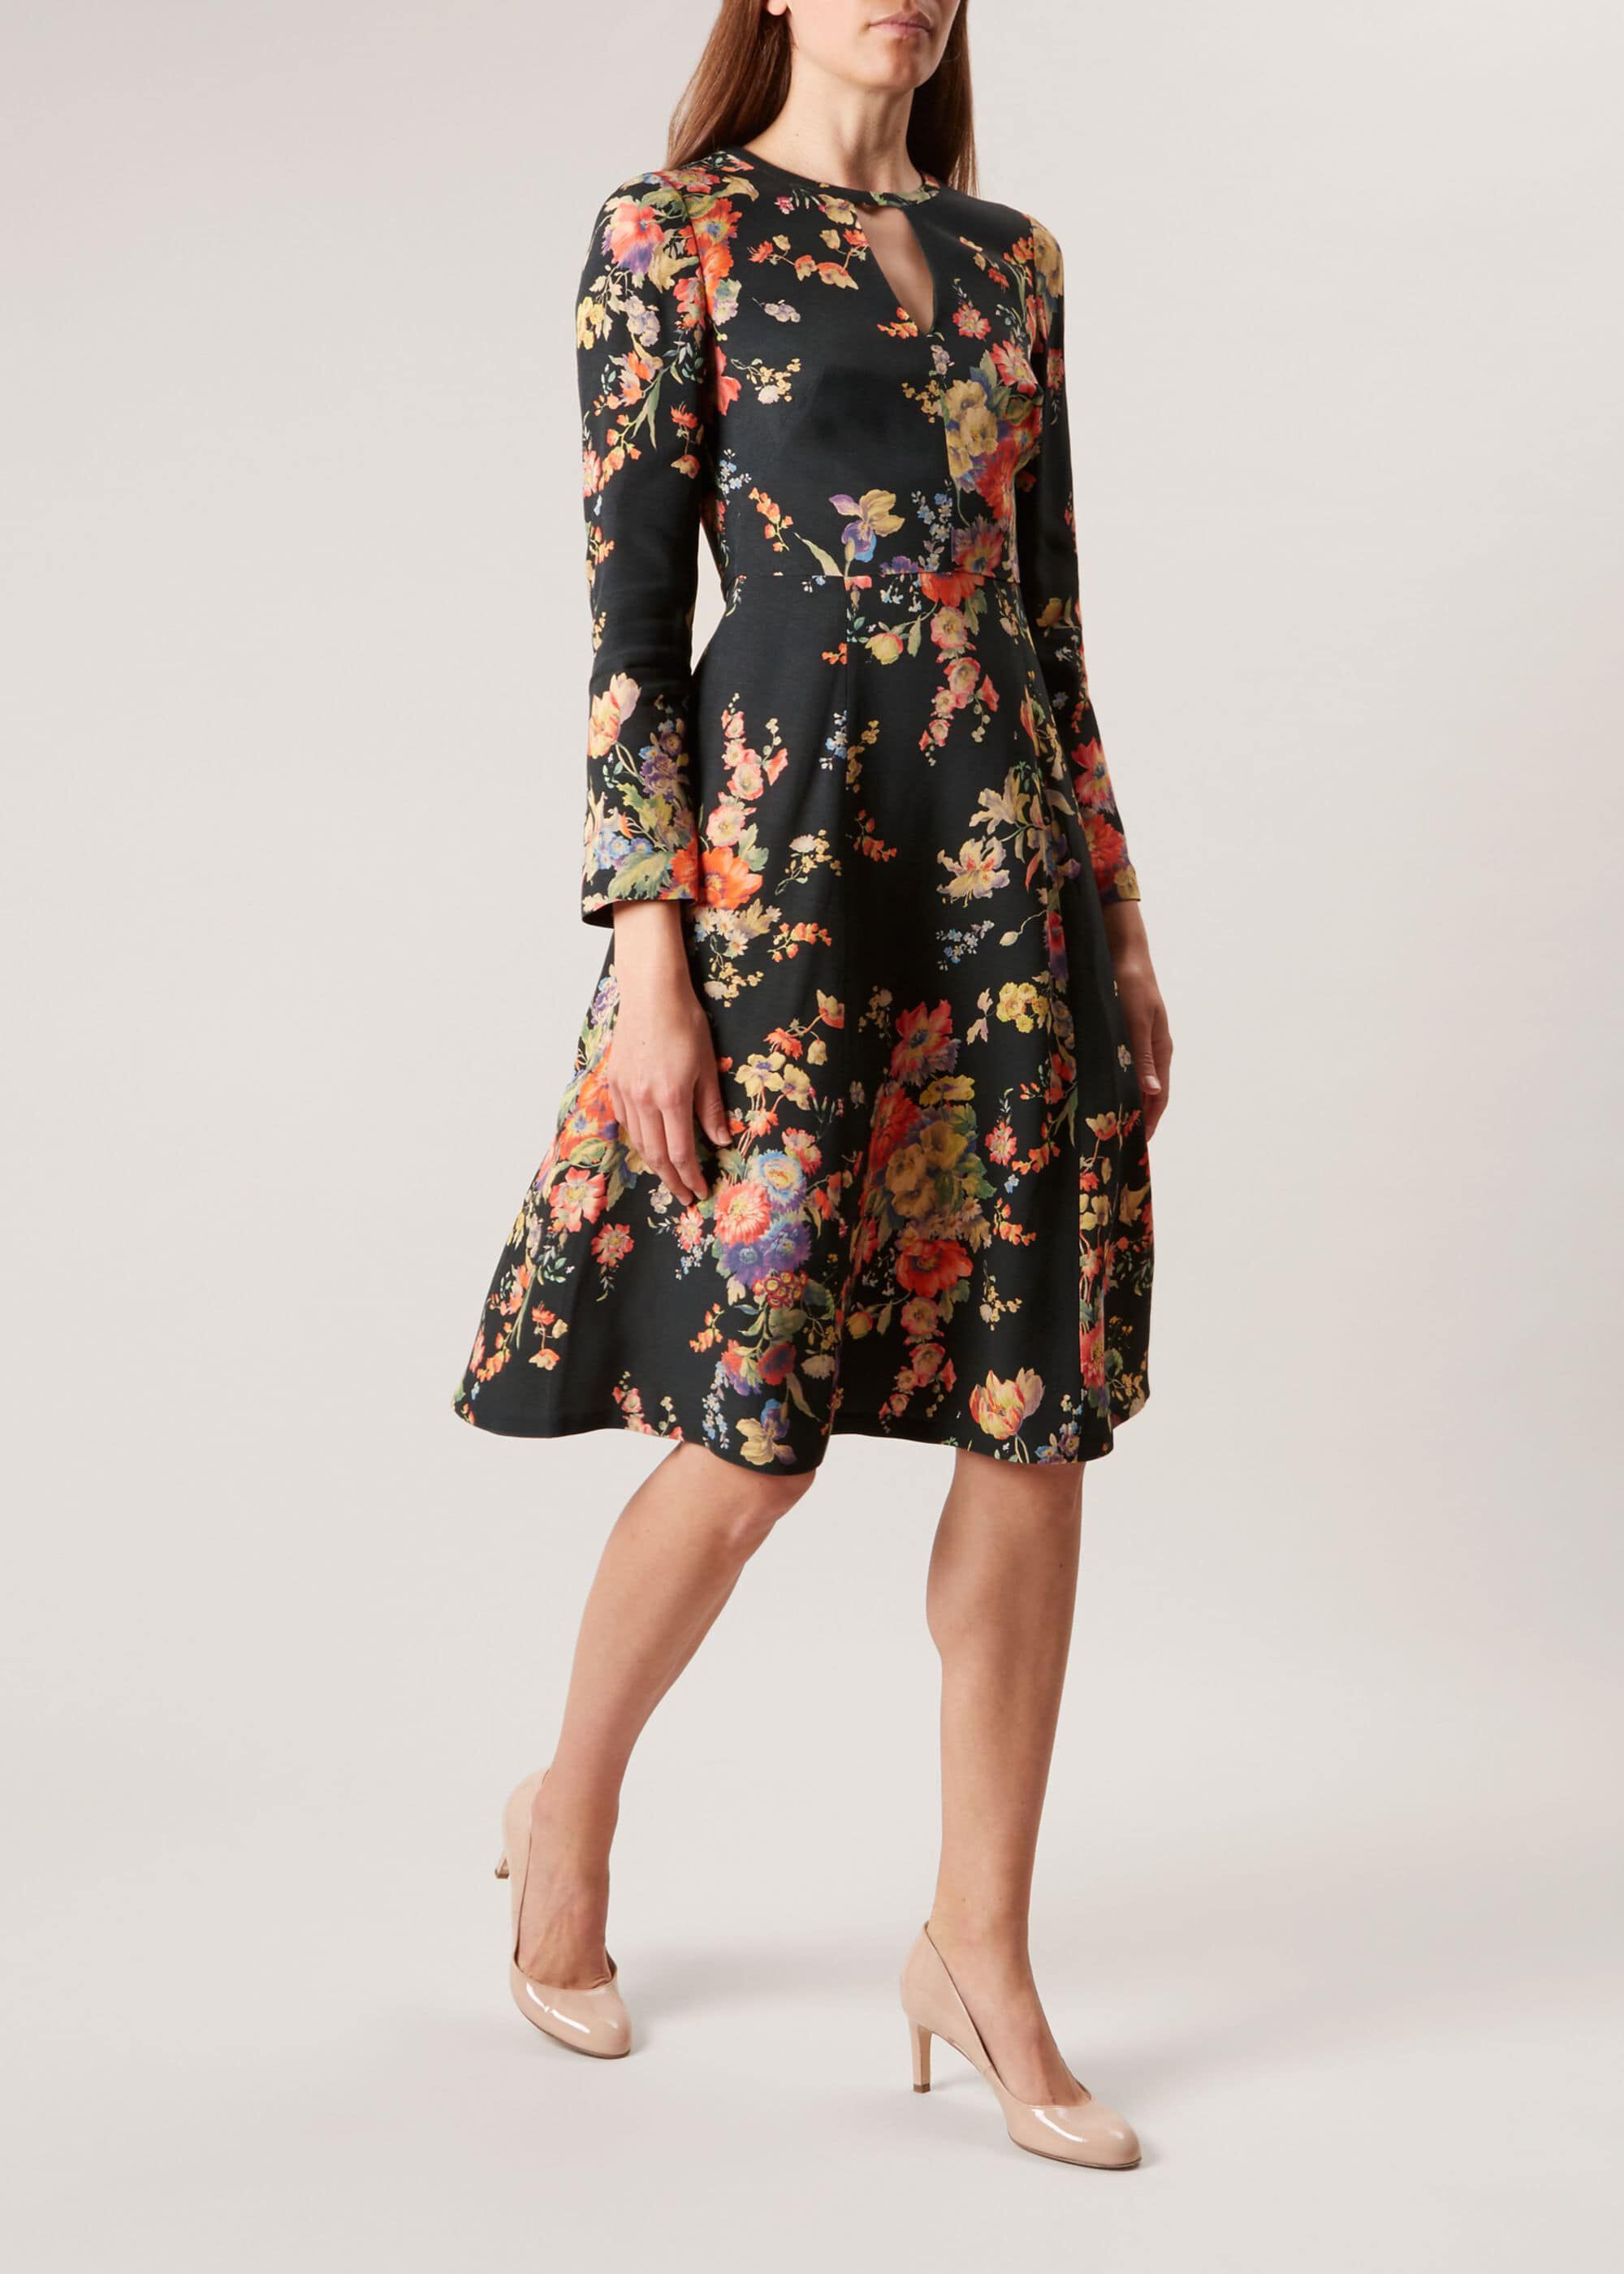 Hobbs Floral Cecilia Dress Knee Length Fit & Flare Long Sleeve | eBay